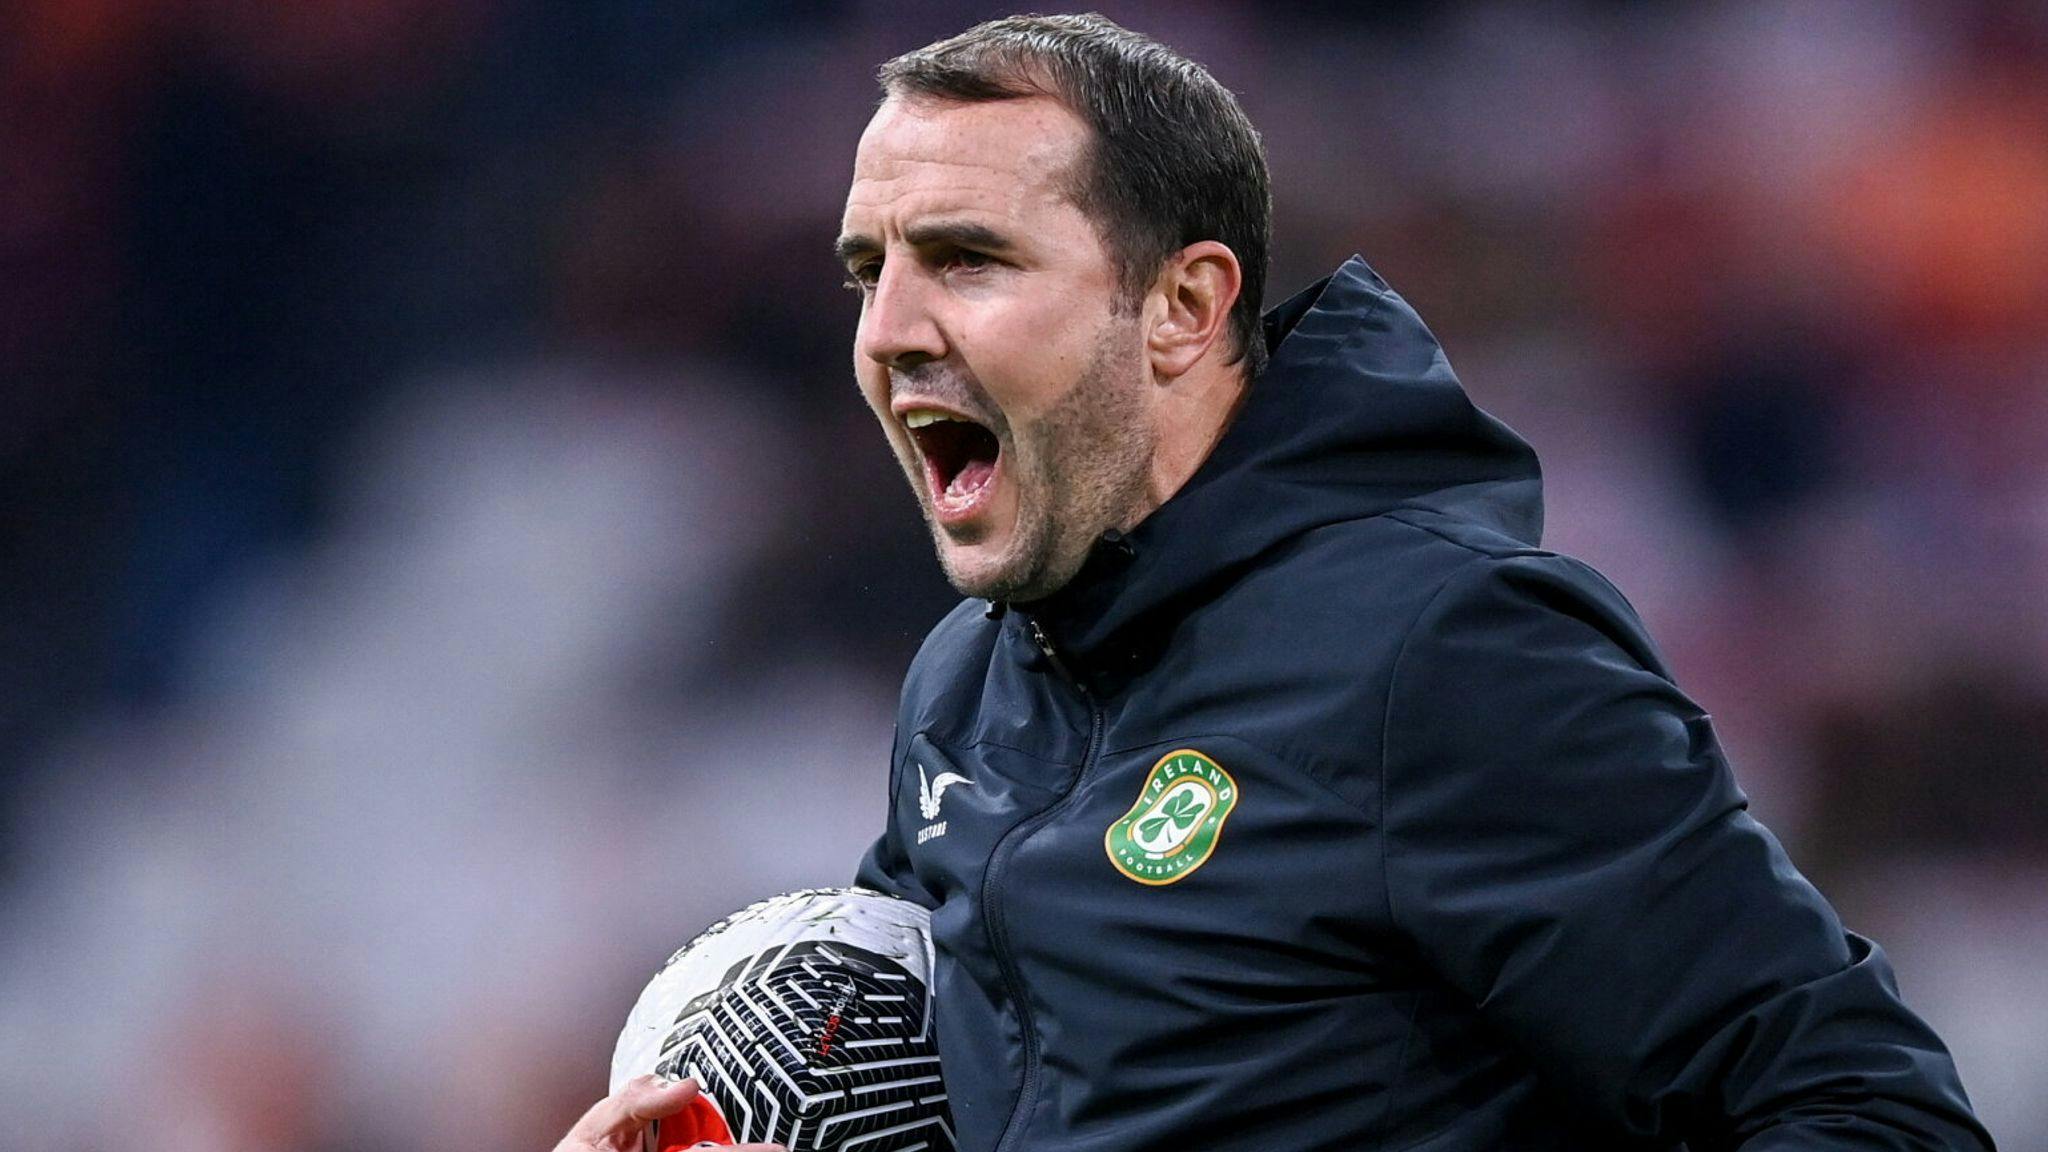 John O'Shea appointed interim head coach of Republic of Ireland